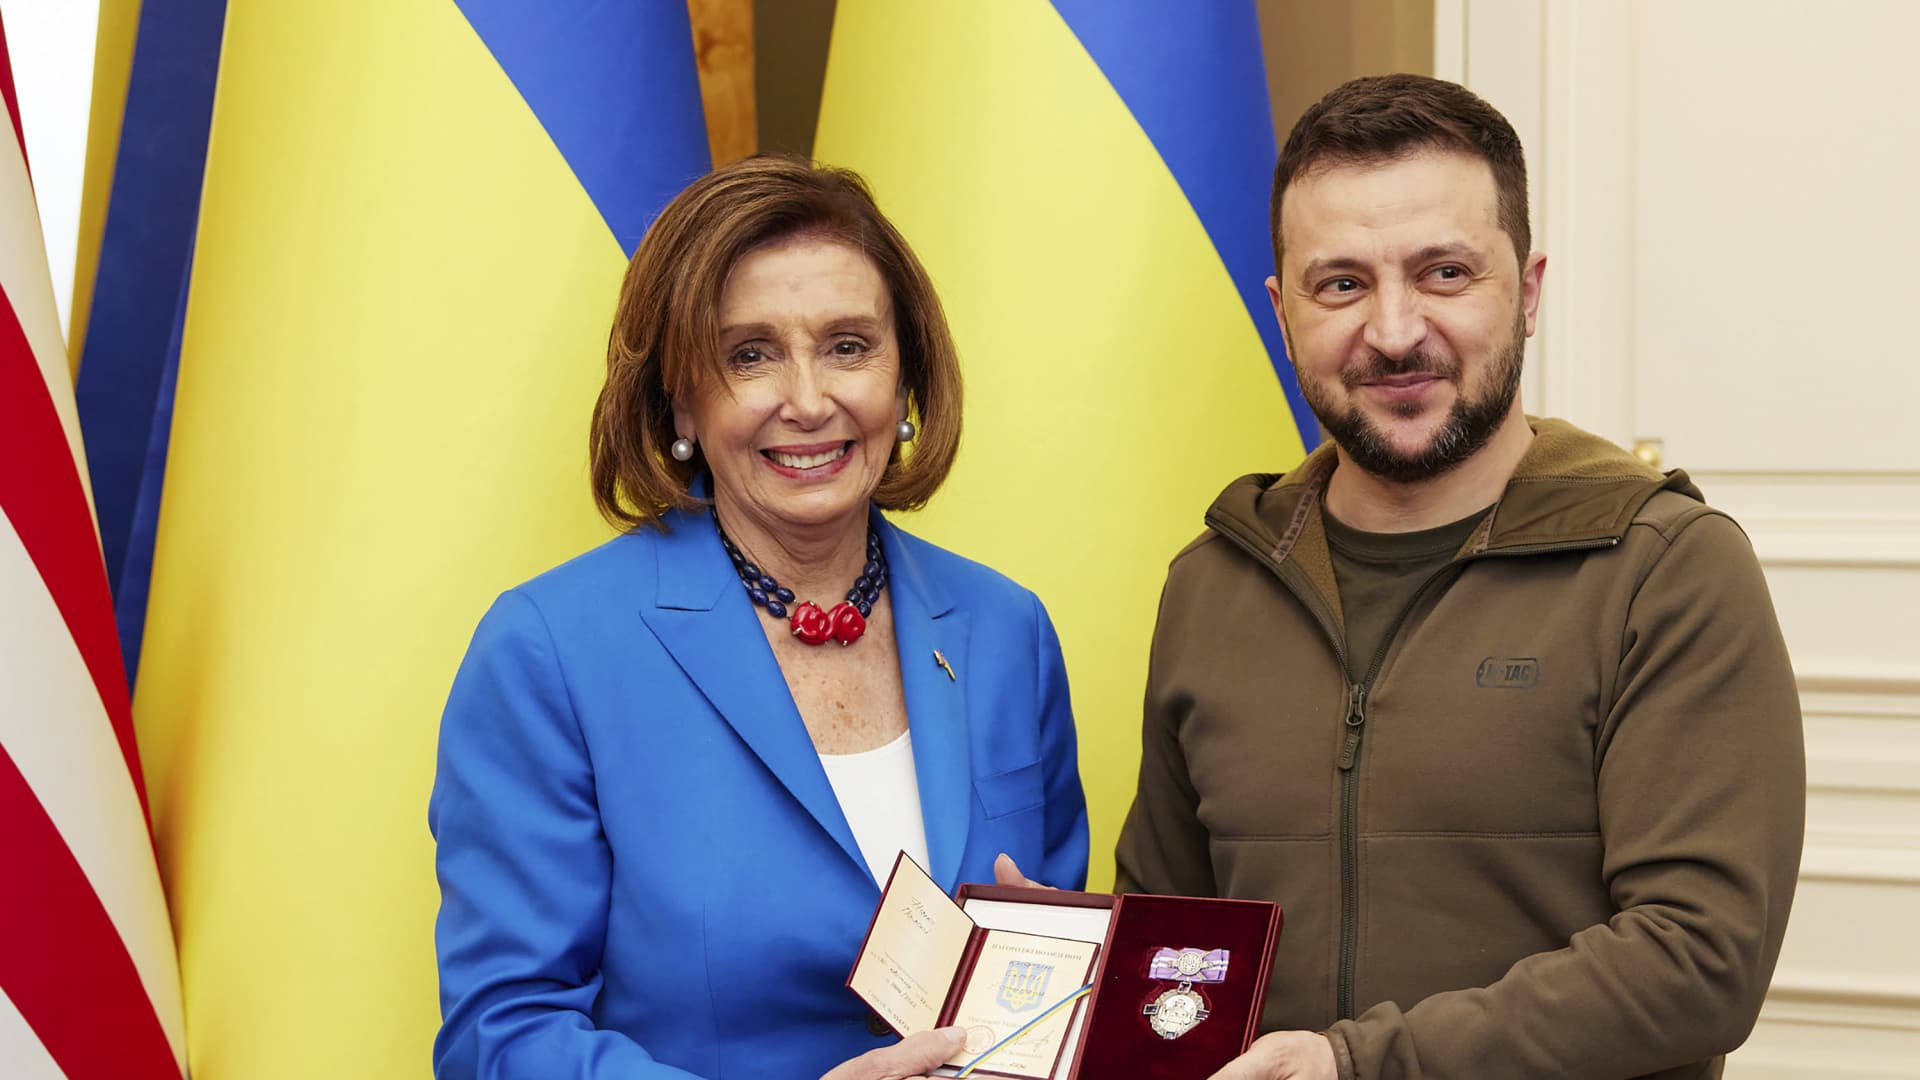 Ukrainian President Volodymyr Zelenskyy, right, awards the Order of Princess Olga, the third grade, to U.S. Speaker of the House Nancy Pelosi in Kyiv, Ukraine, Saturday, April 30, 2022.